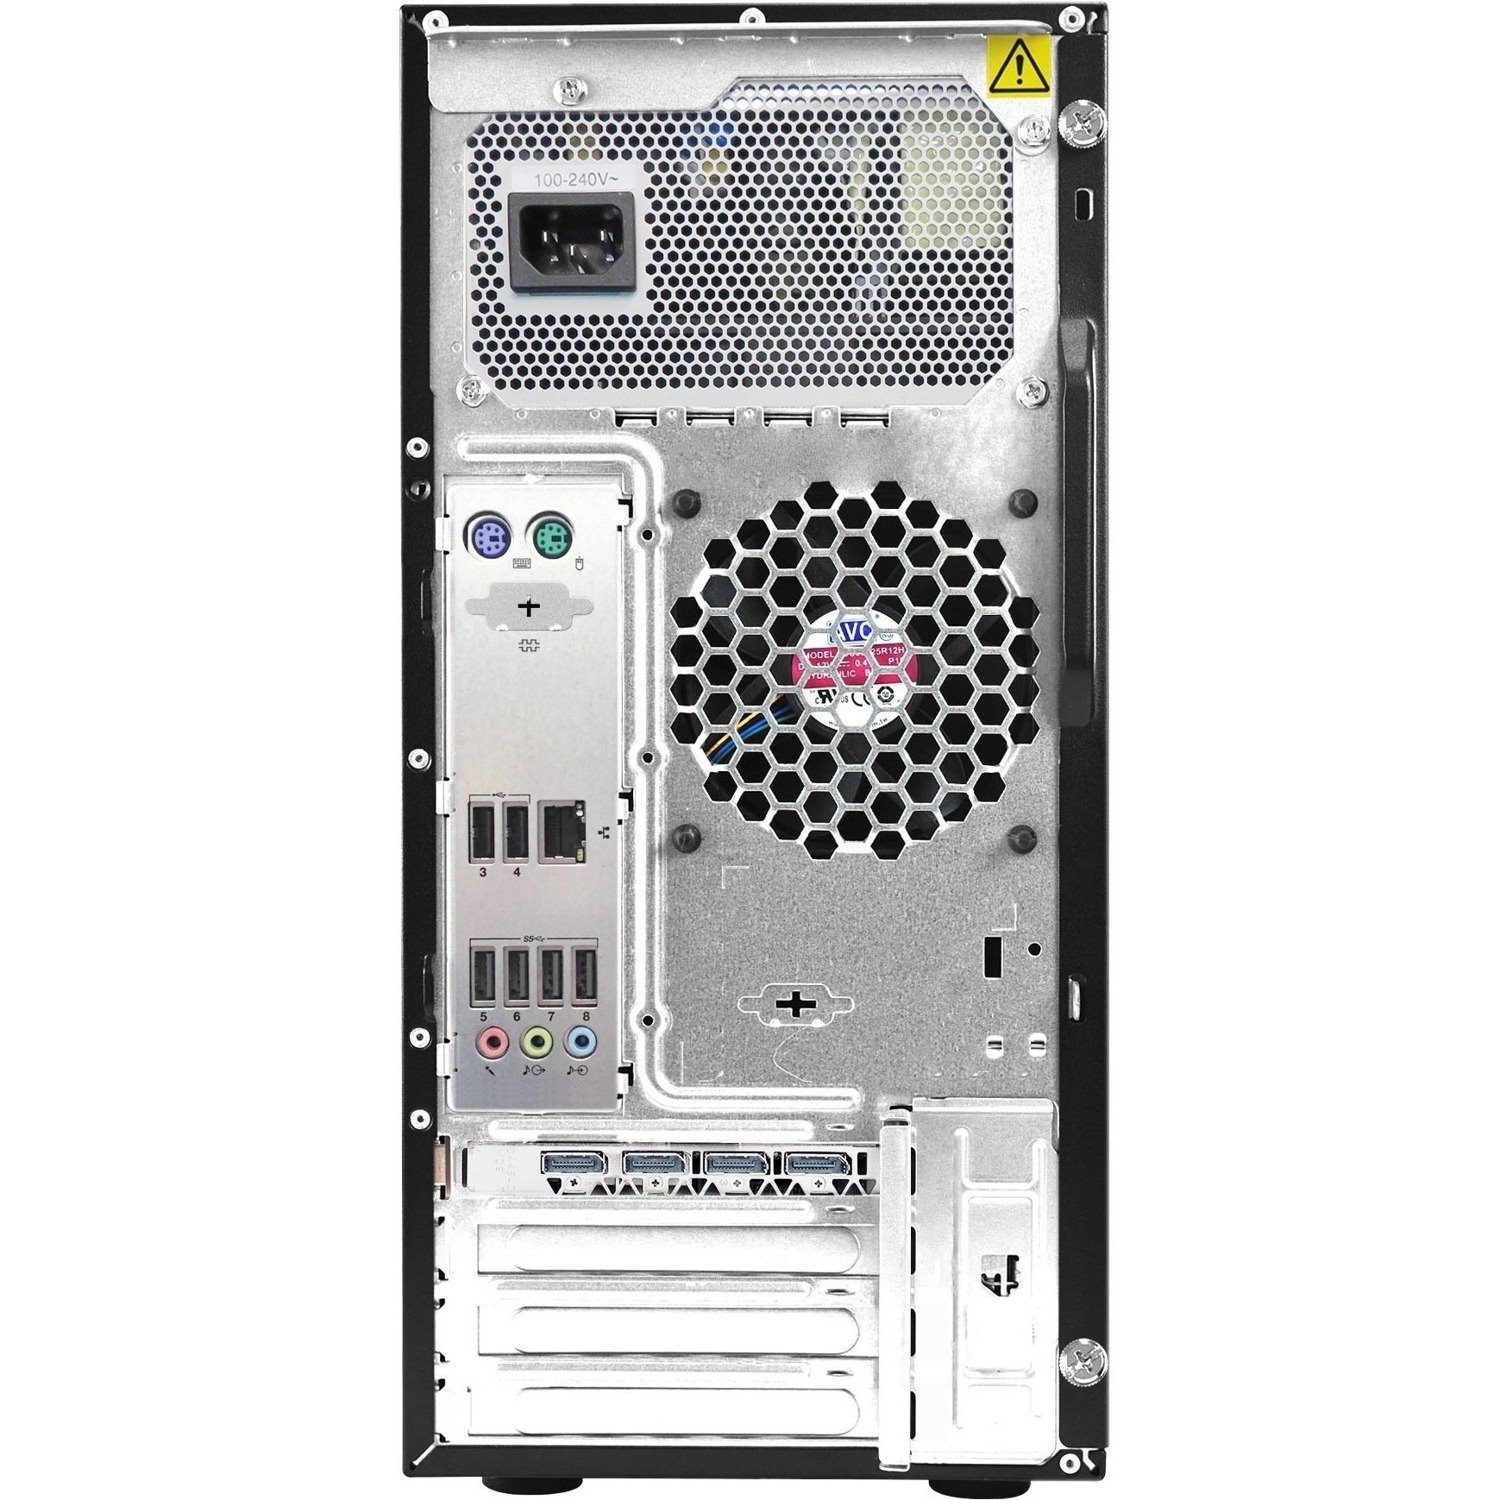 Lenovo ThinkStation P520c 30BX00FVUS Workstation - 1 x Intel Xeon W-2225 - 32 GB - 1 TB SSD - Tower